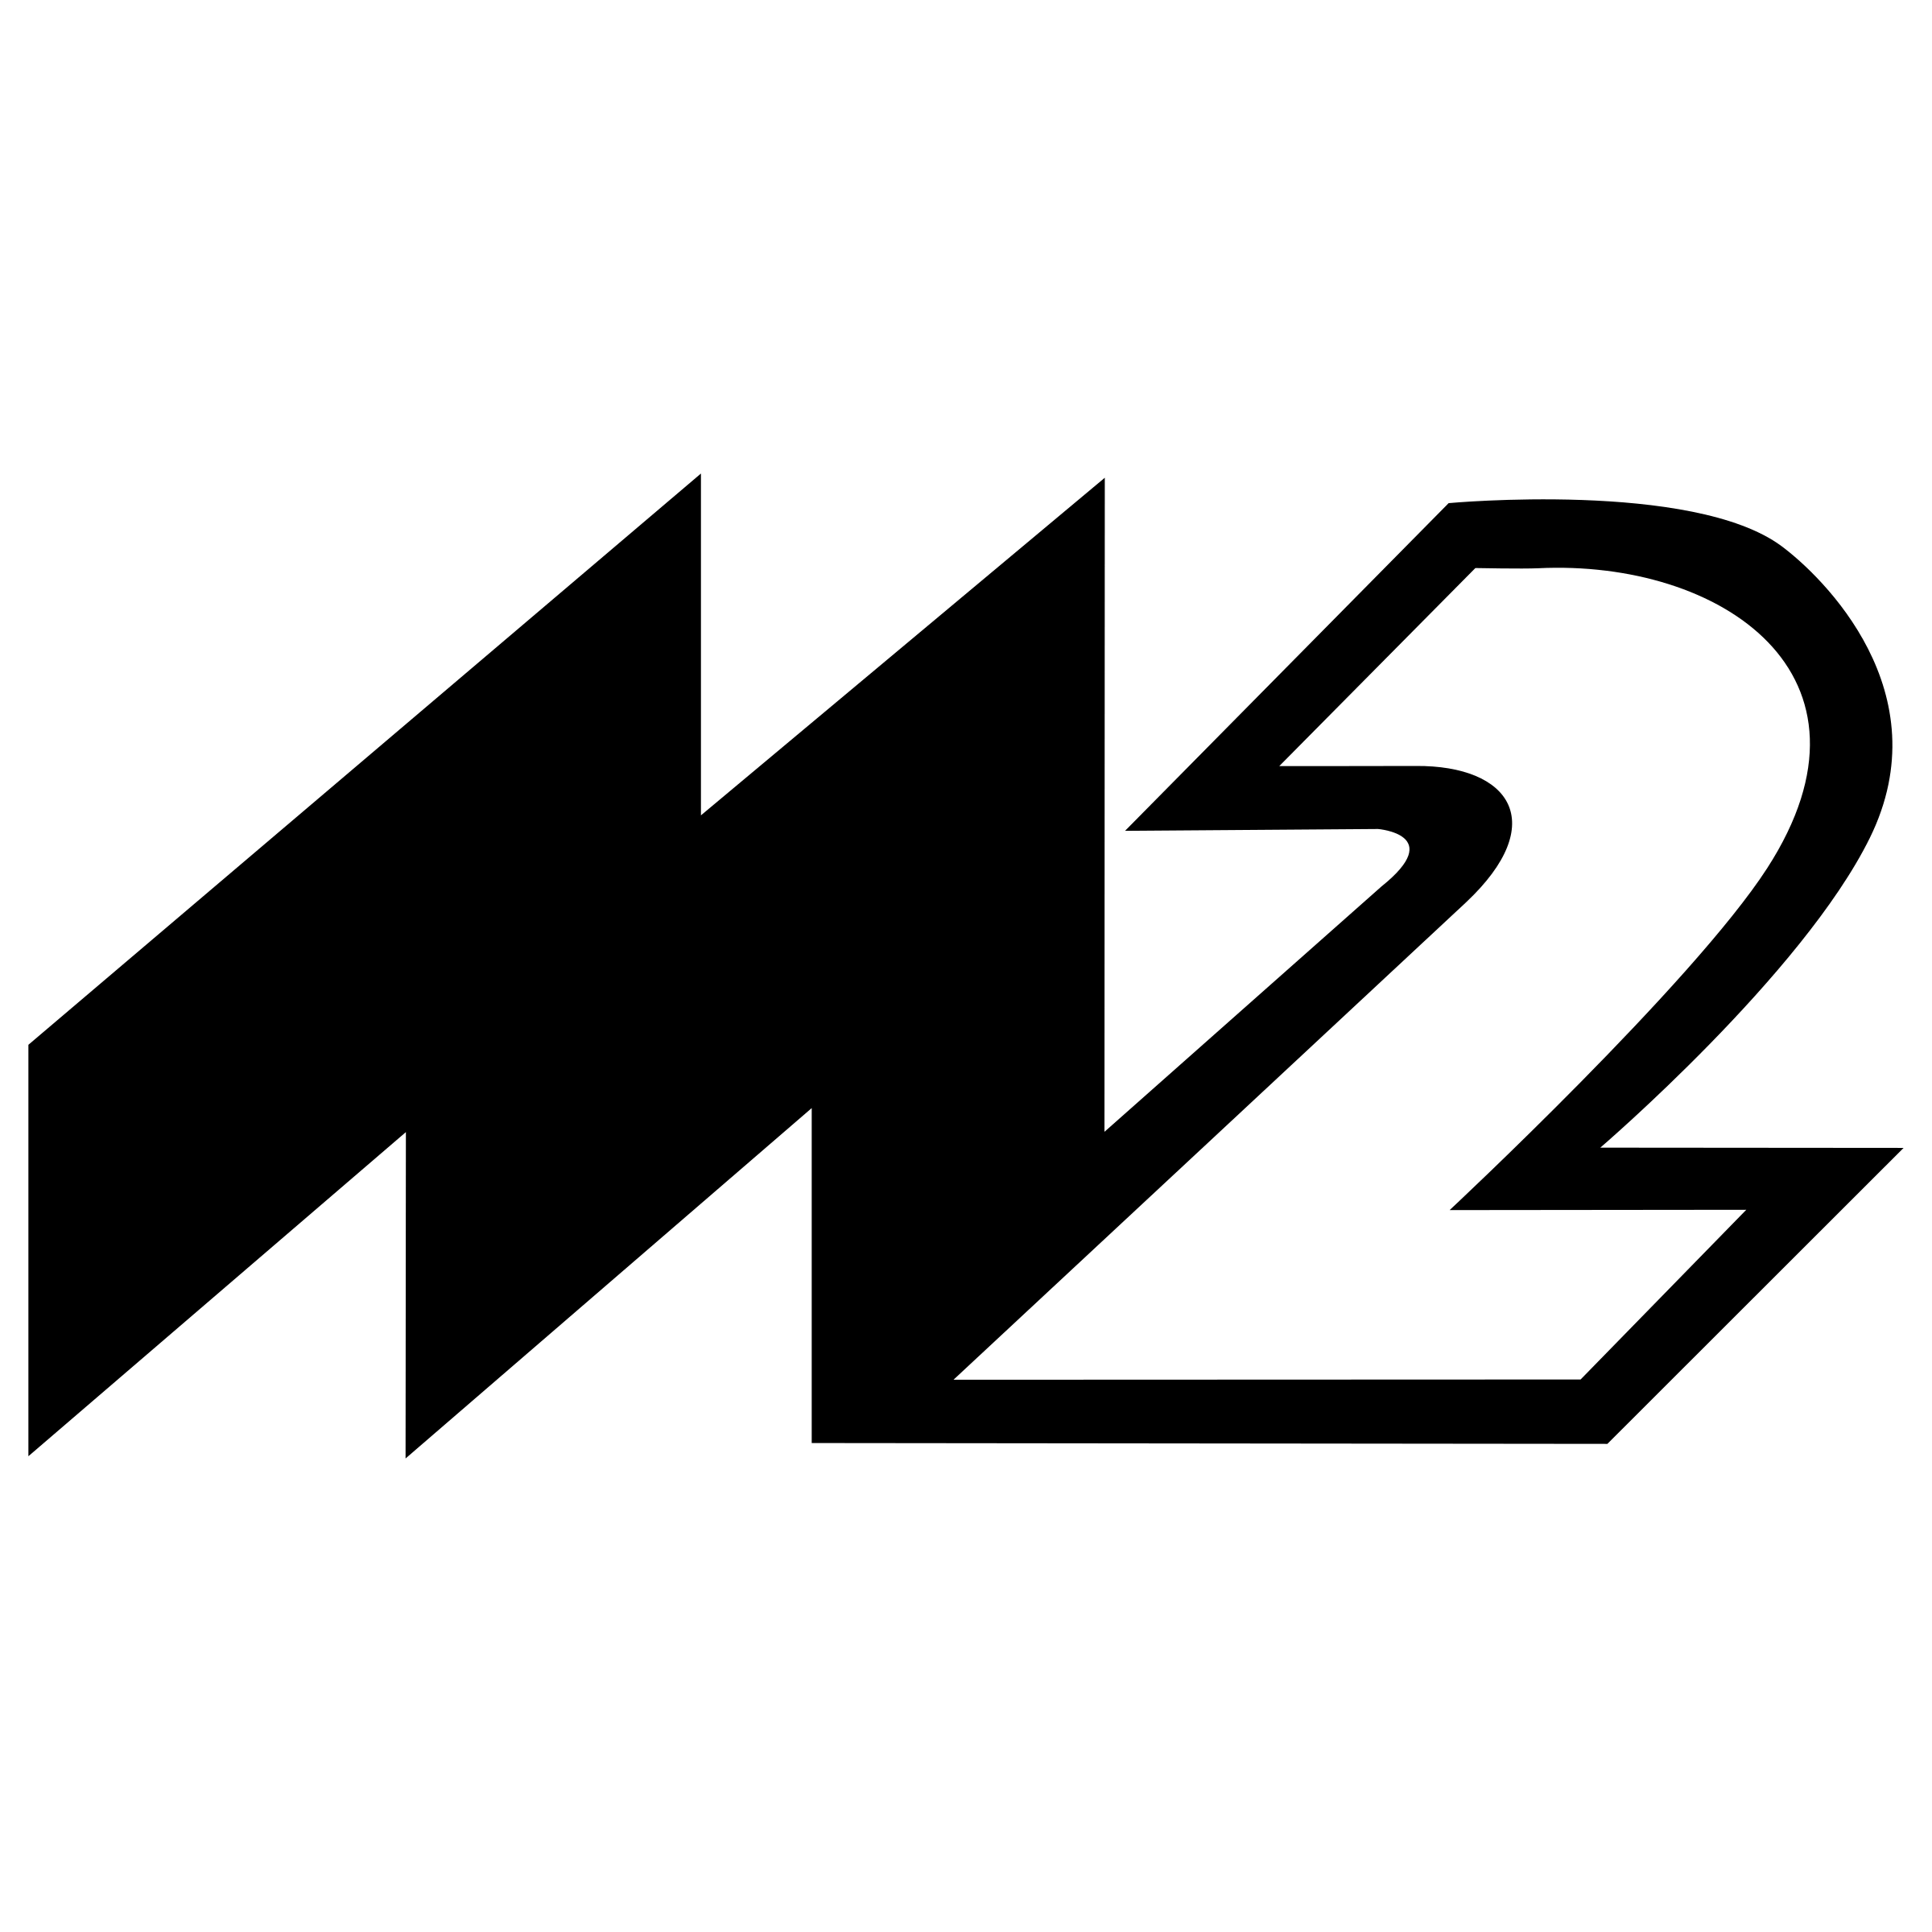 M2 Logo - M2 Logo PNG Transparent & SVG Vector - Freebie Supply